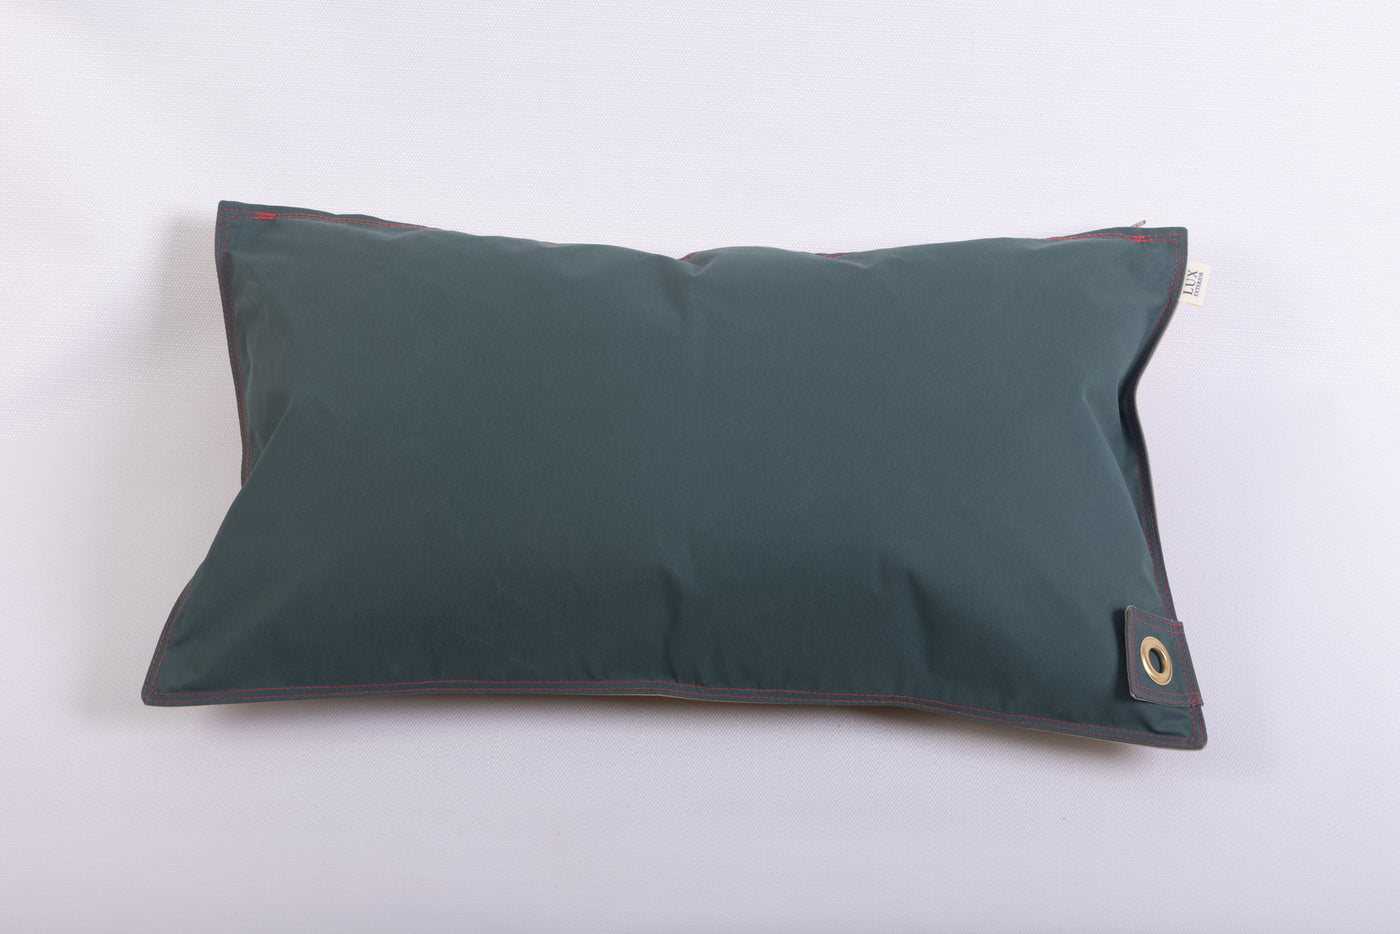 Pillow Protector Waxed Canvas